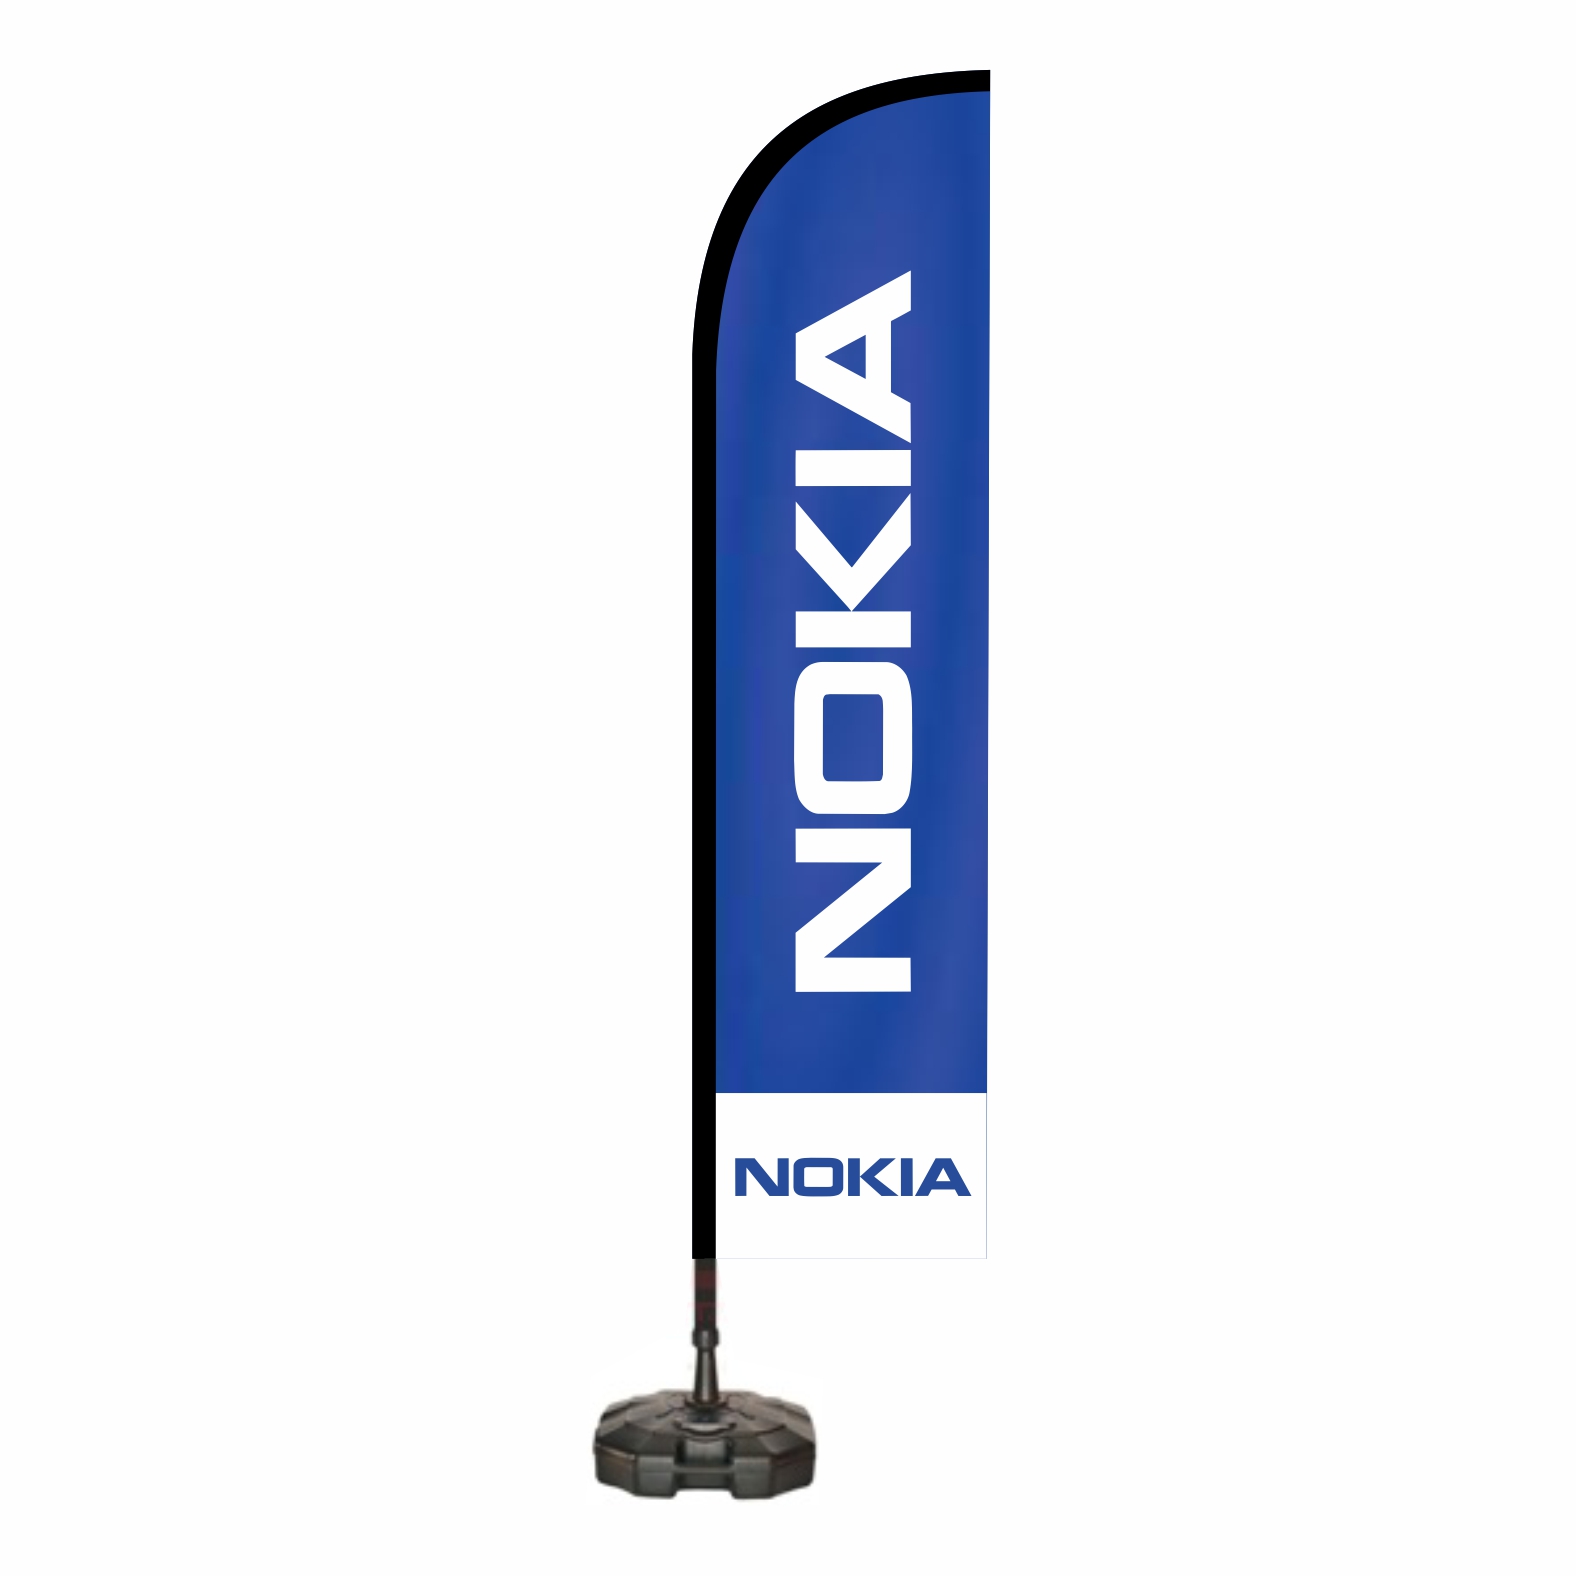 Nokia Yol Bayra Tasarmlar